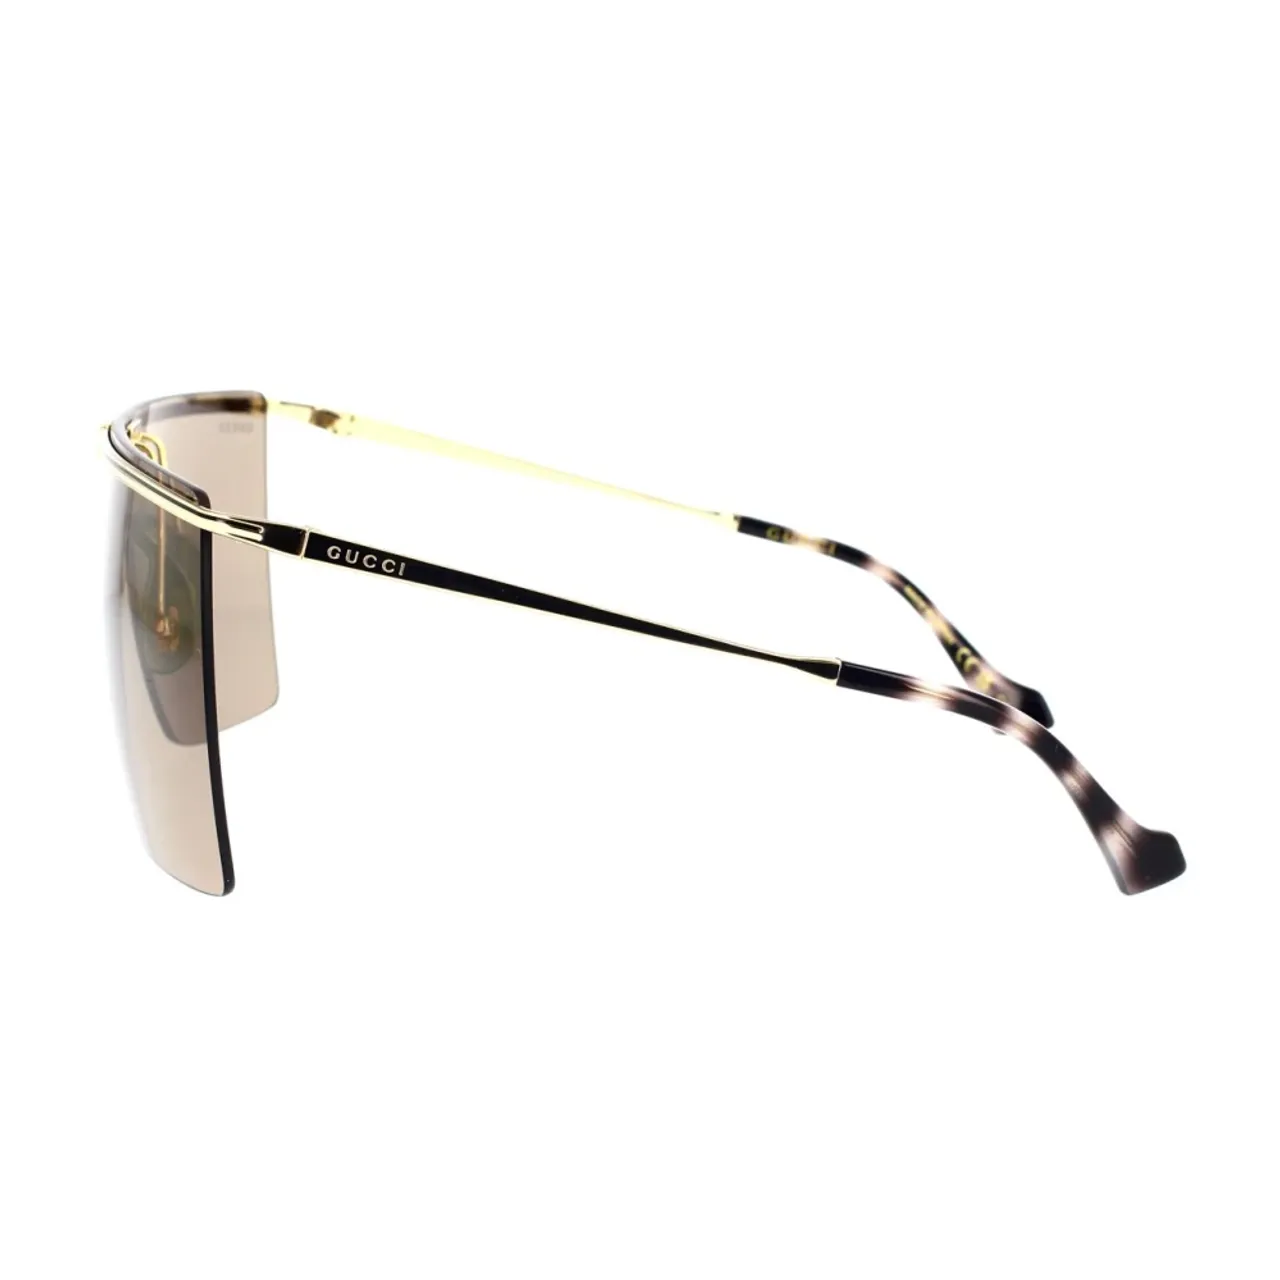 Moderne Oversized Sonnenbrille mit Web-Motiv Gucci